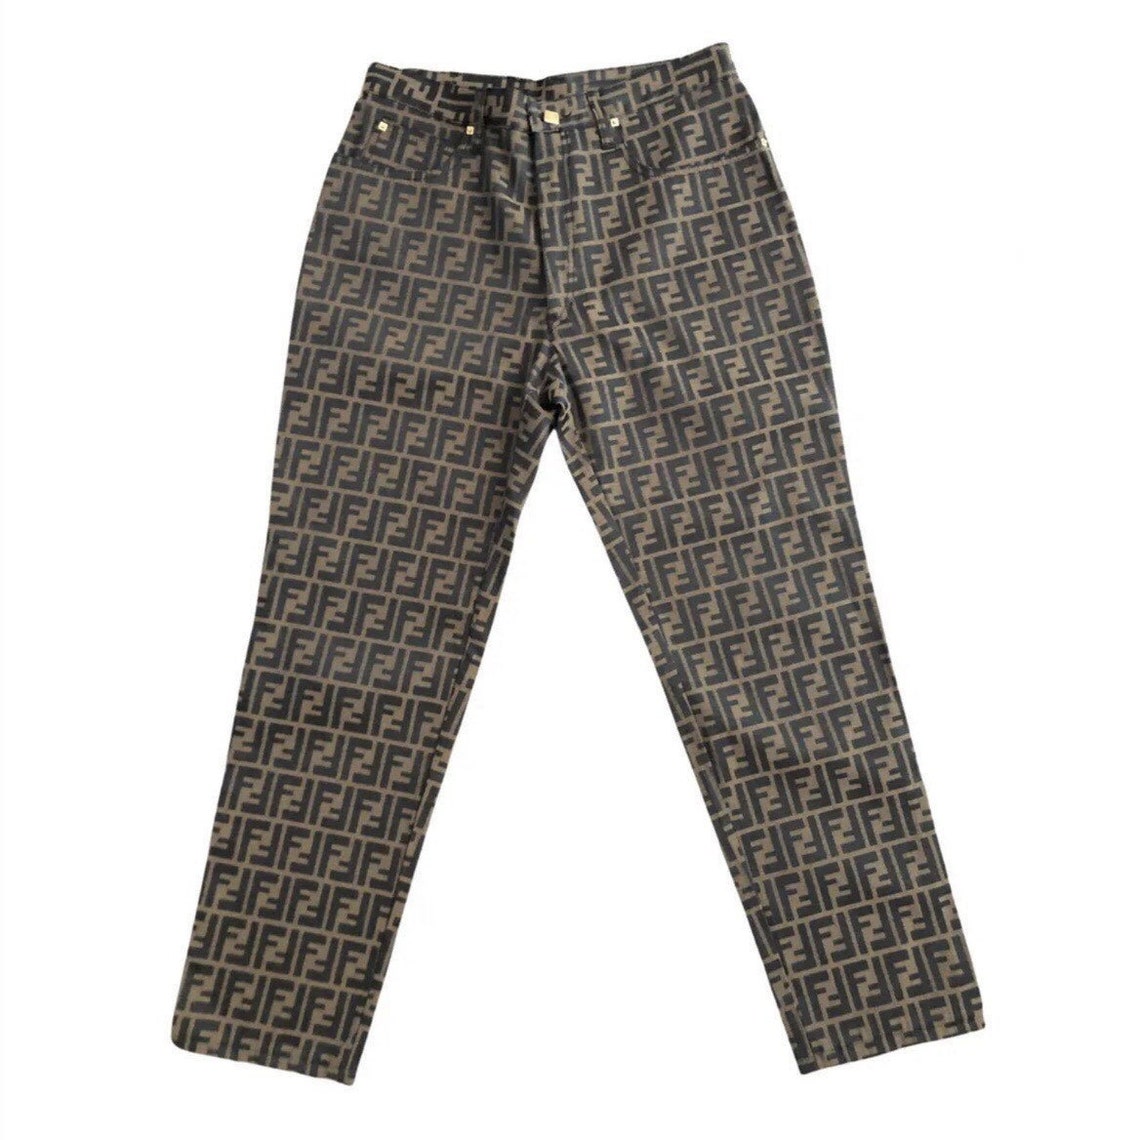 Fendi trousers Authentic Fendi Zucca Monogram High Rise | Etsy